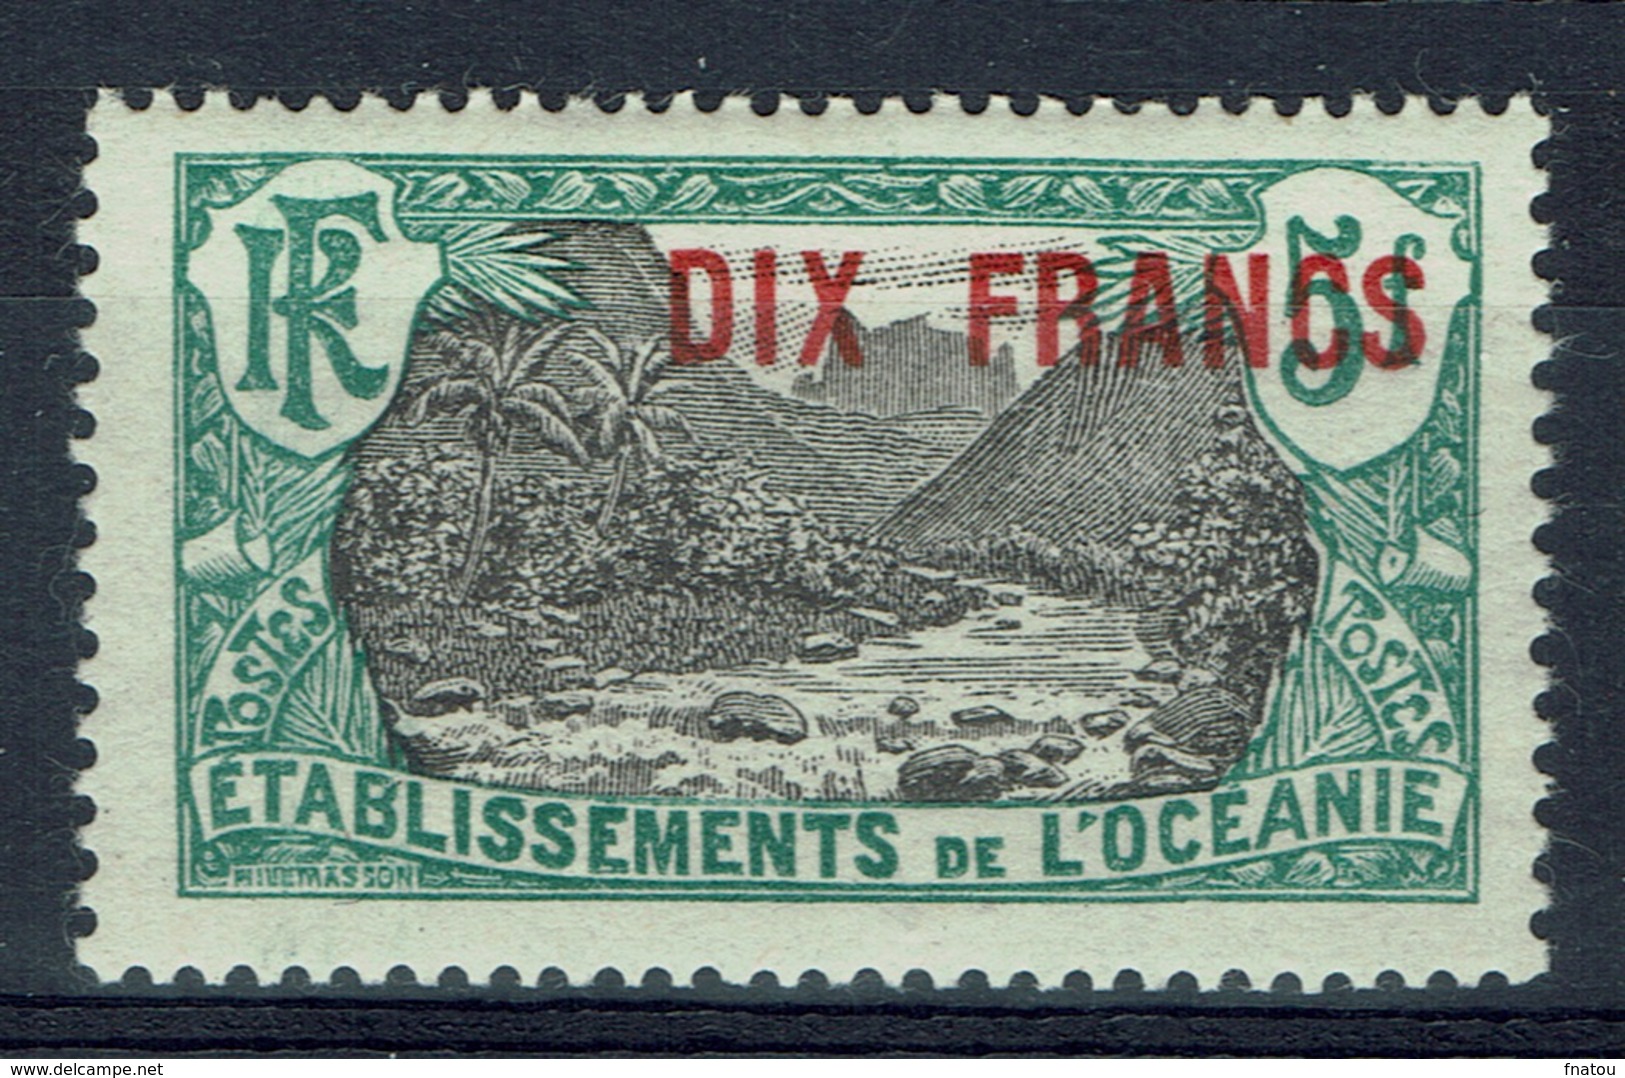 French Oceania, Fataoua Valley, Overprint DIX (ten) F./5f, 1926, MH VF - Nuovi